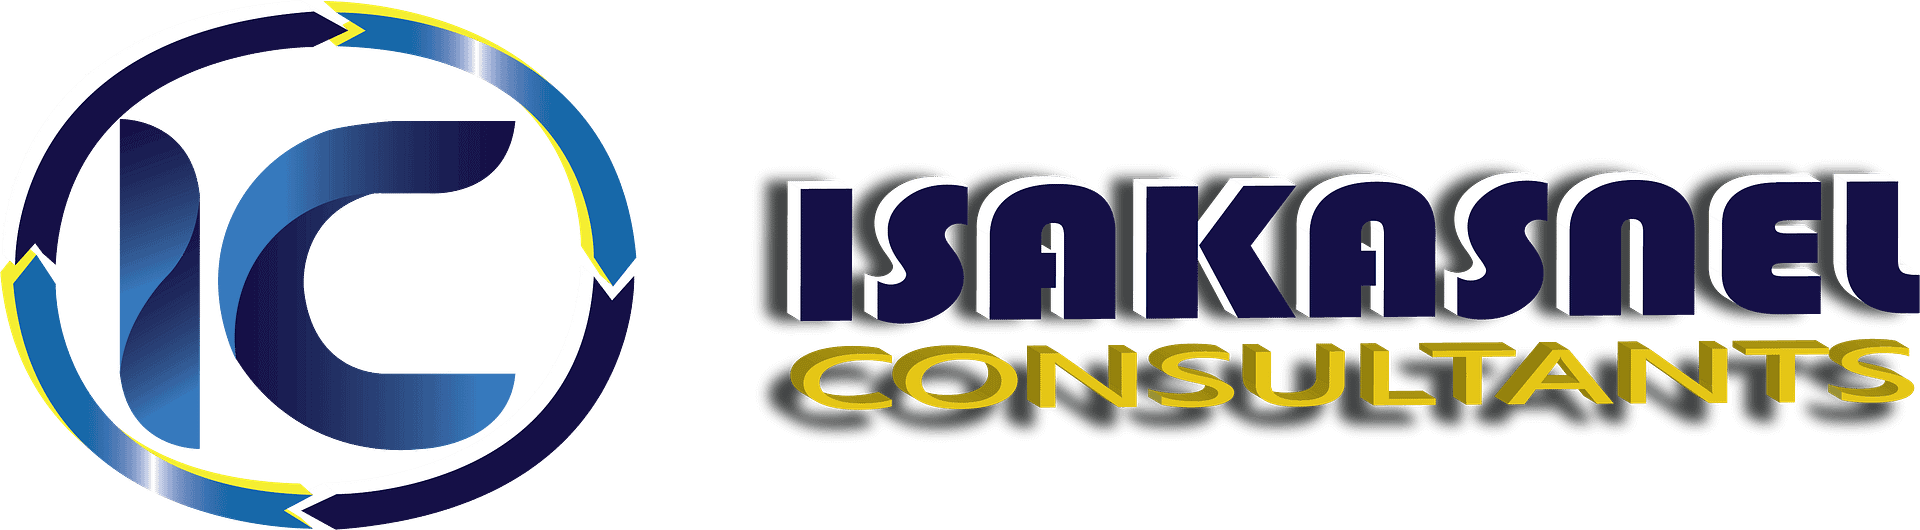 isakasnel-consultants-logo